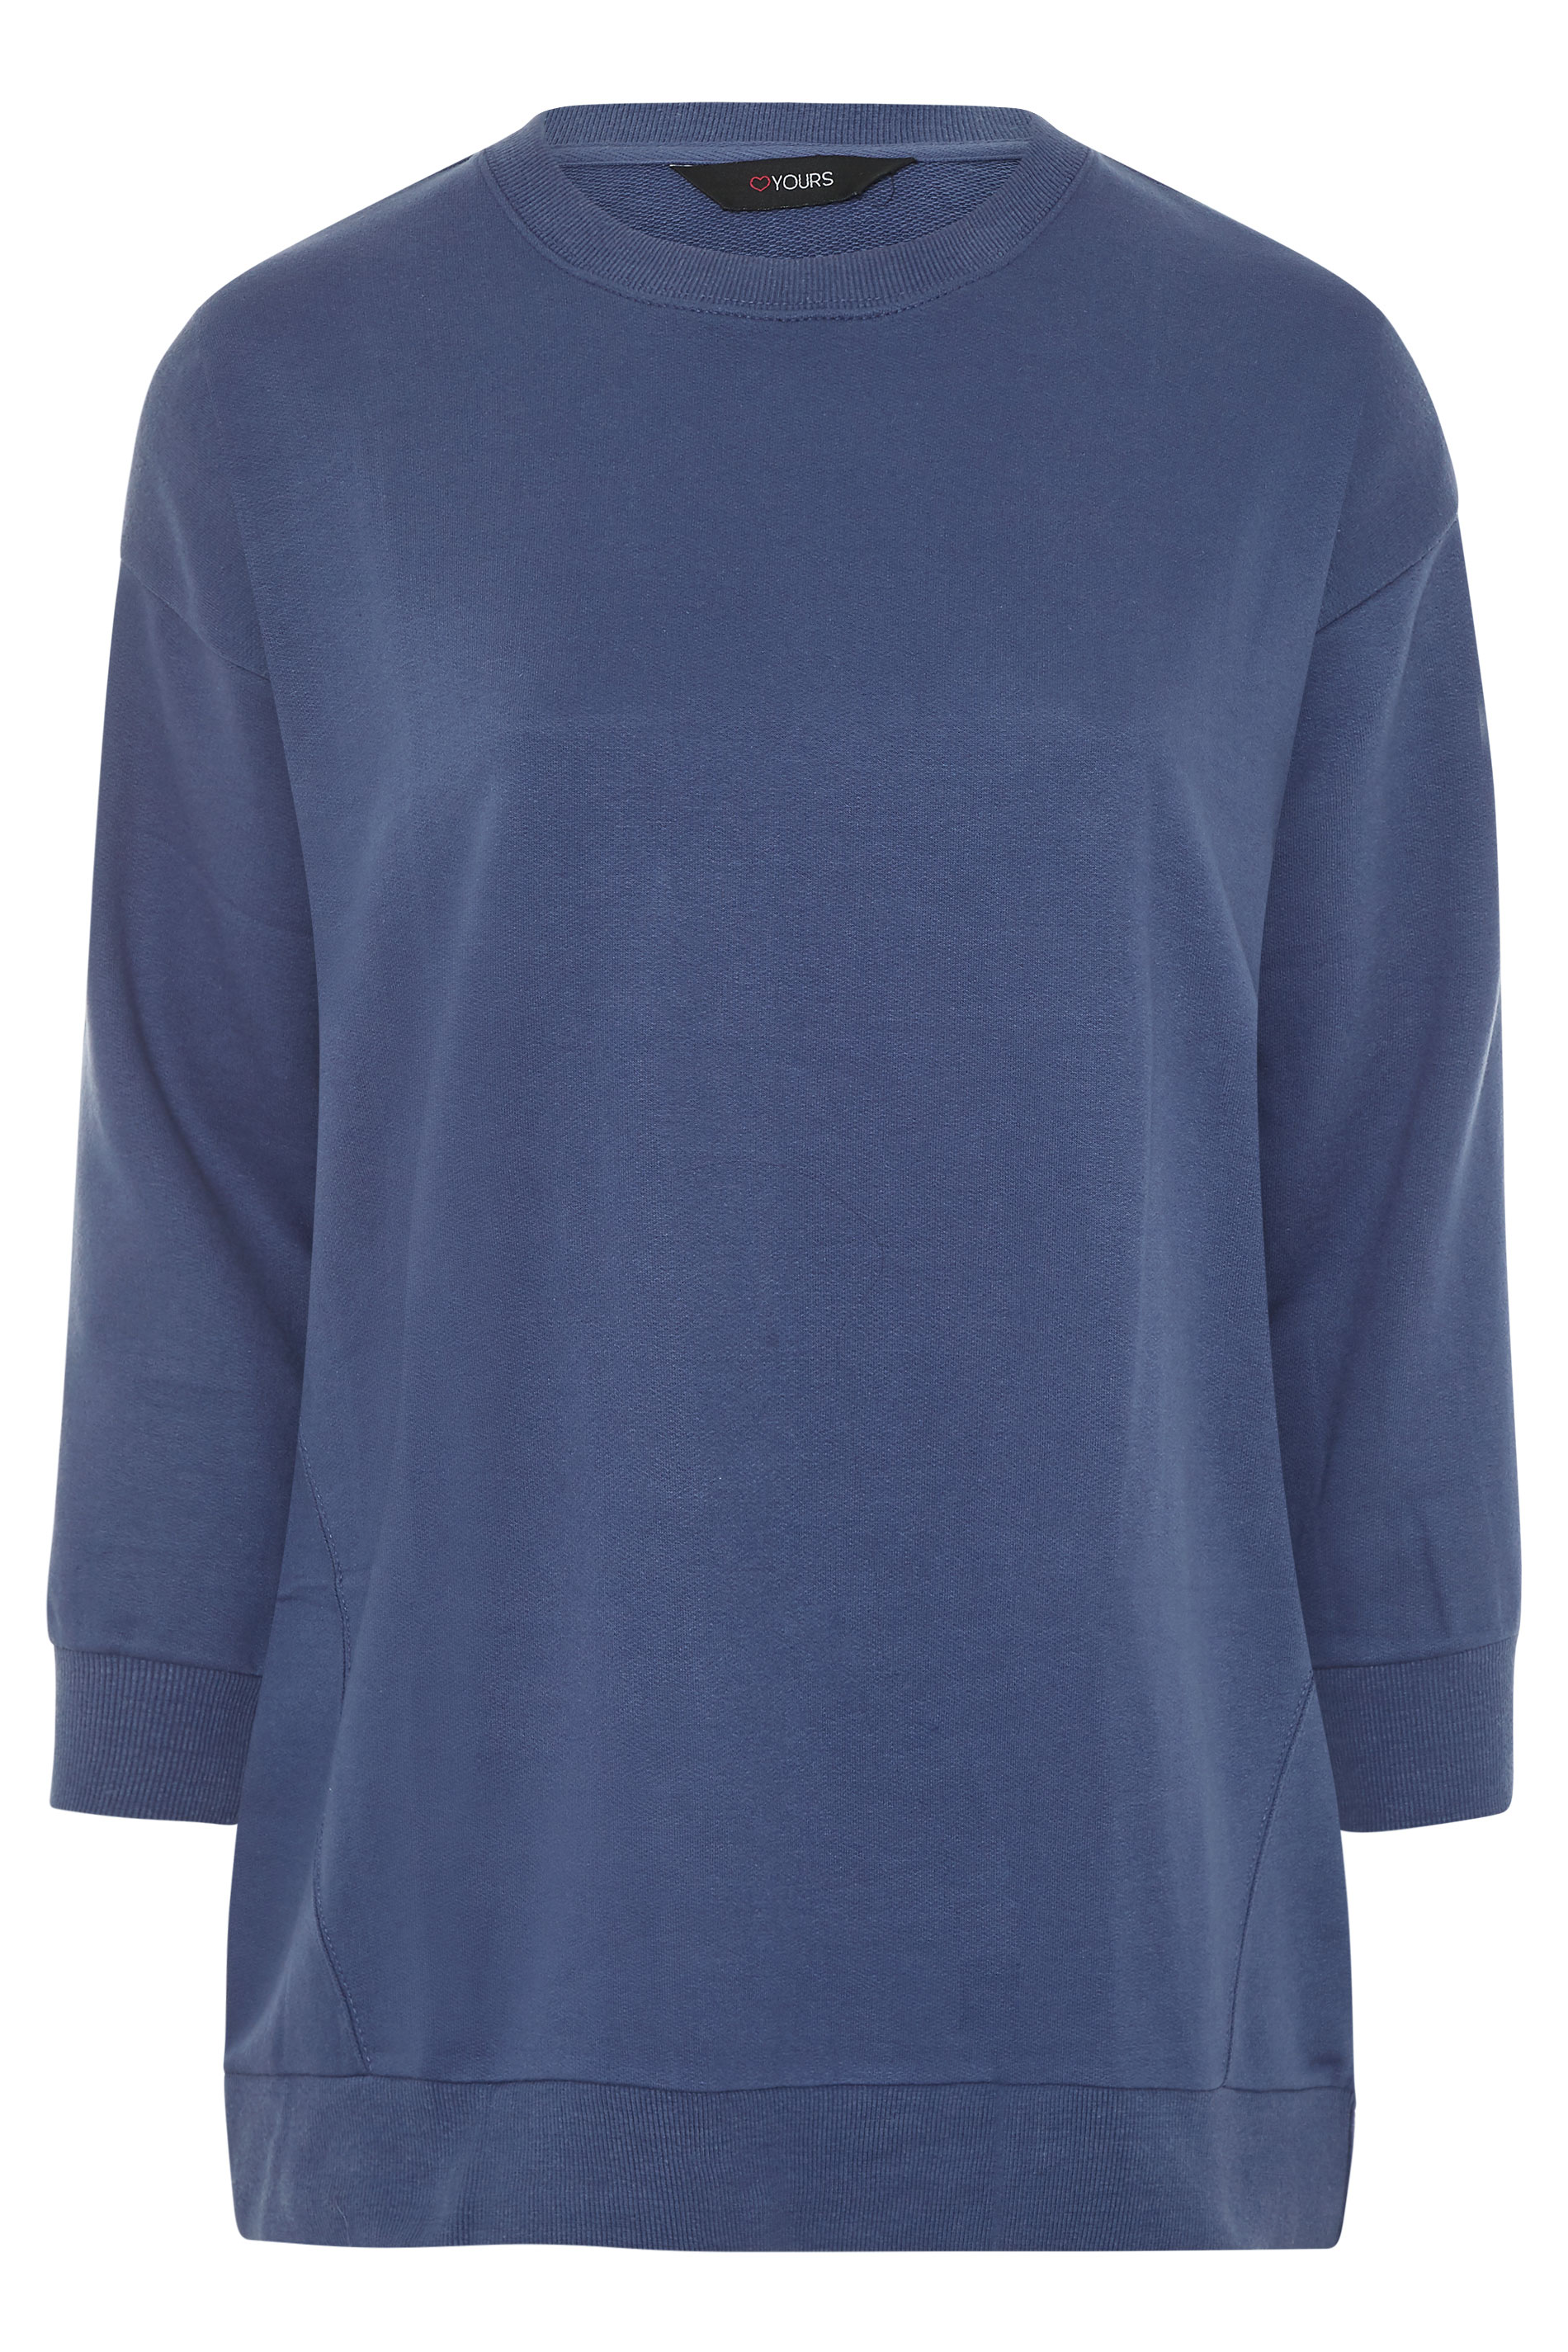 Steel Blue Varsity Longline Sweatshirt | Yours Clothing